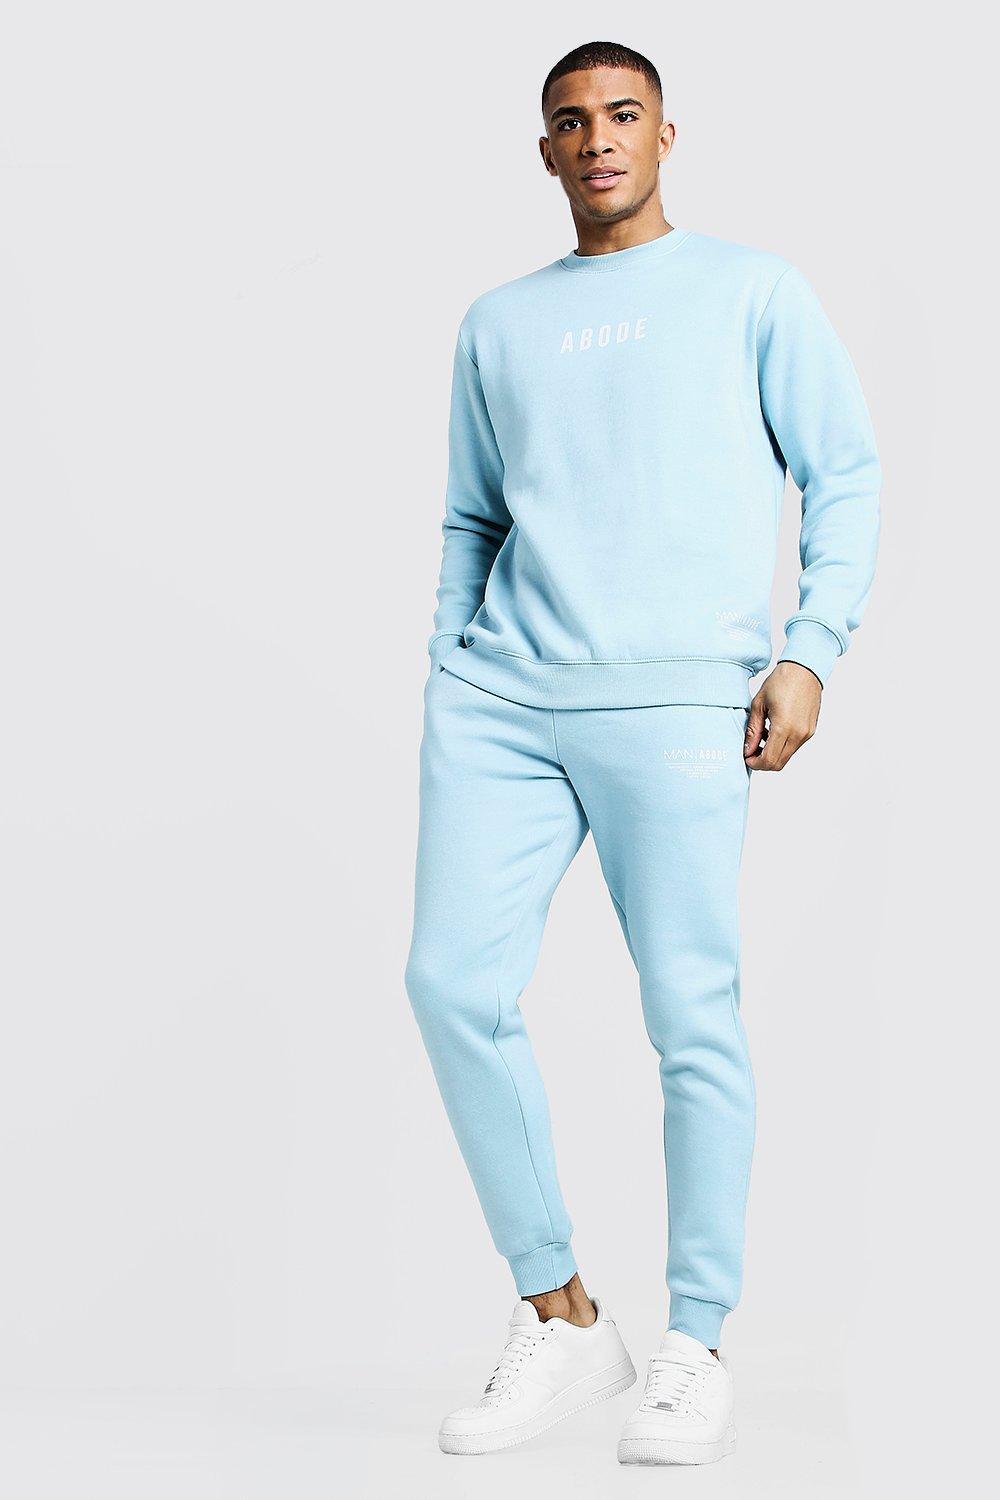 horisont Kantine mestre BoohooMAN Man X Abode Sweater Tracksuit in Blue for Men | Lyst